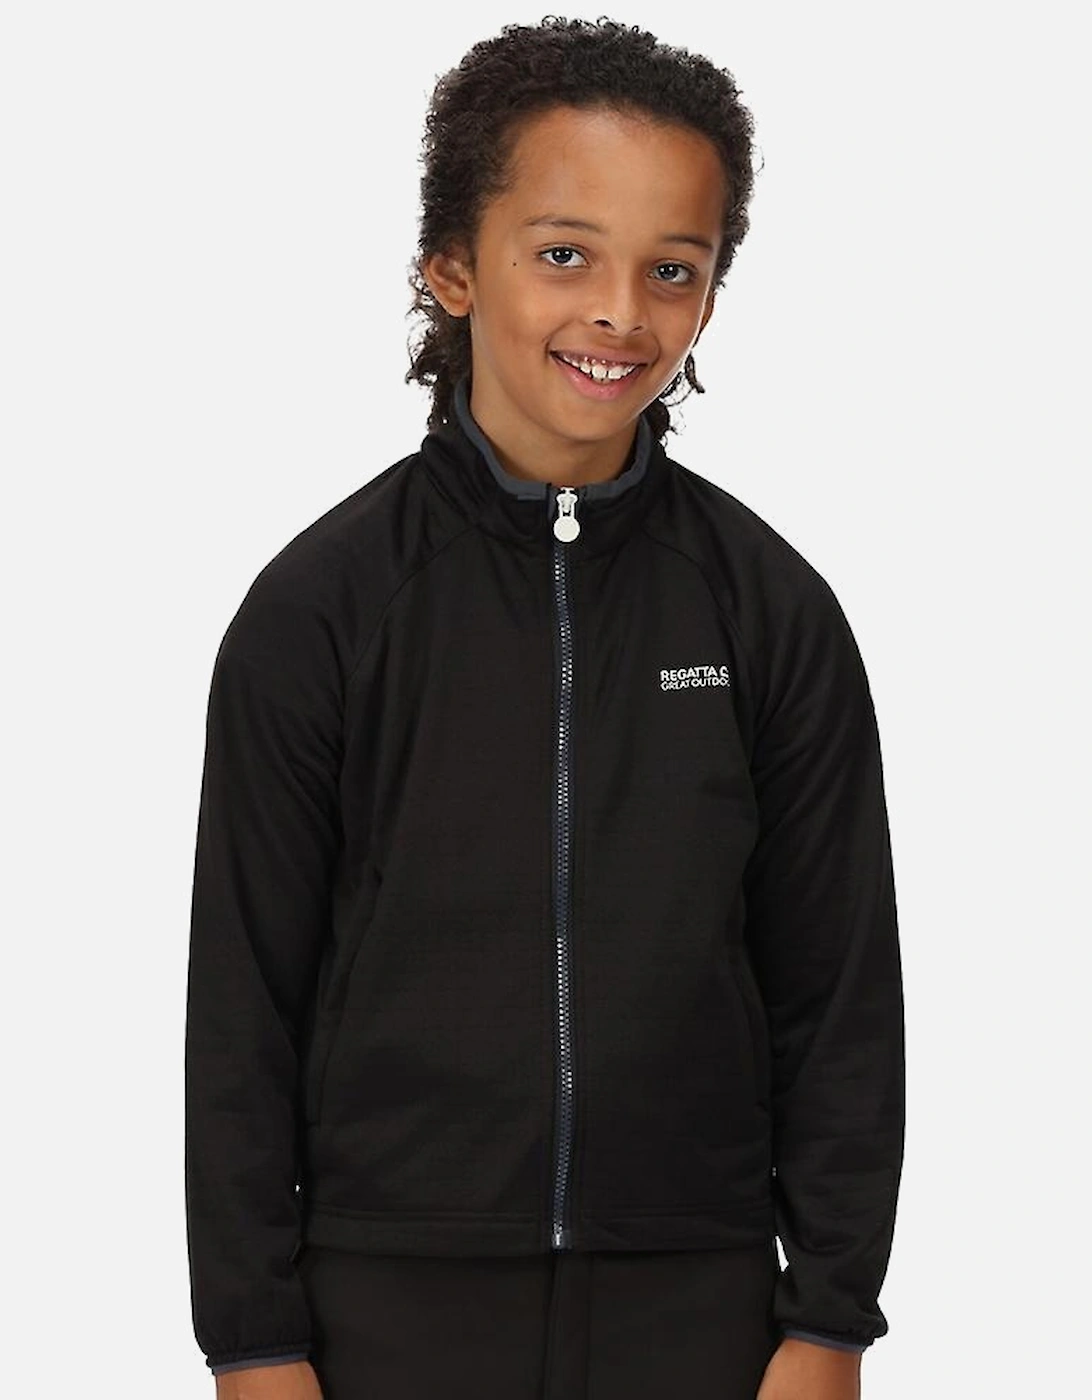 Childrens/Kids Highton Lite II Soft Shell Jacket